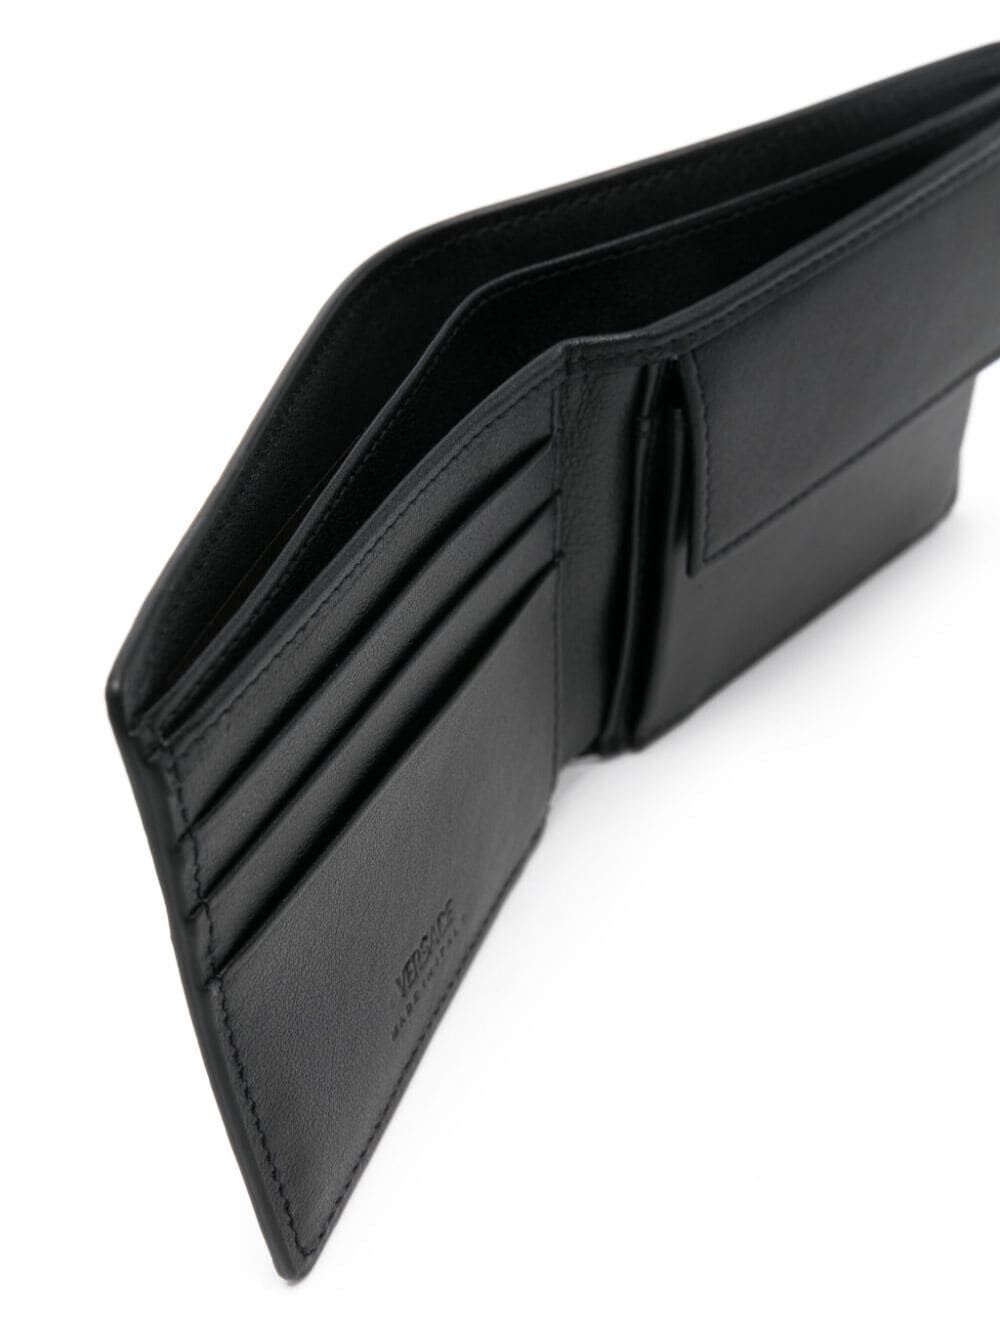 Shop Versace Wallet With Coin Calf In P Black Palladium